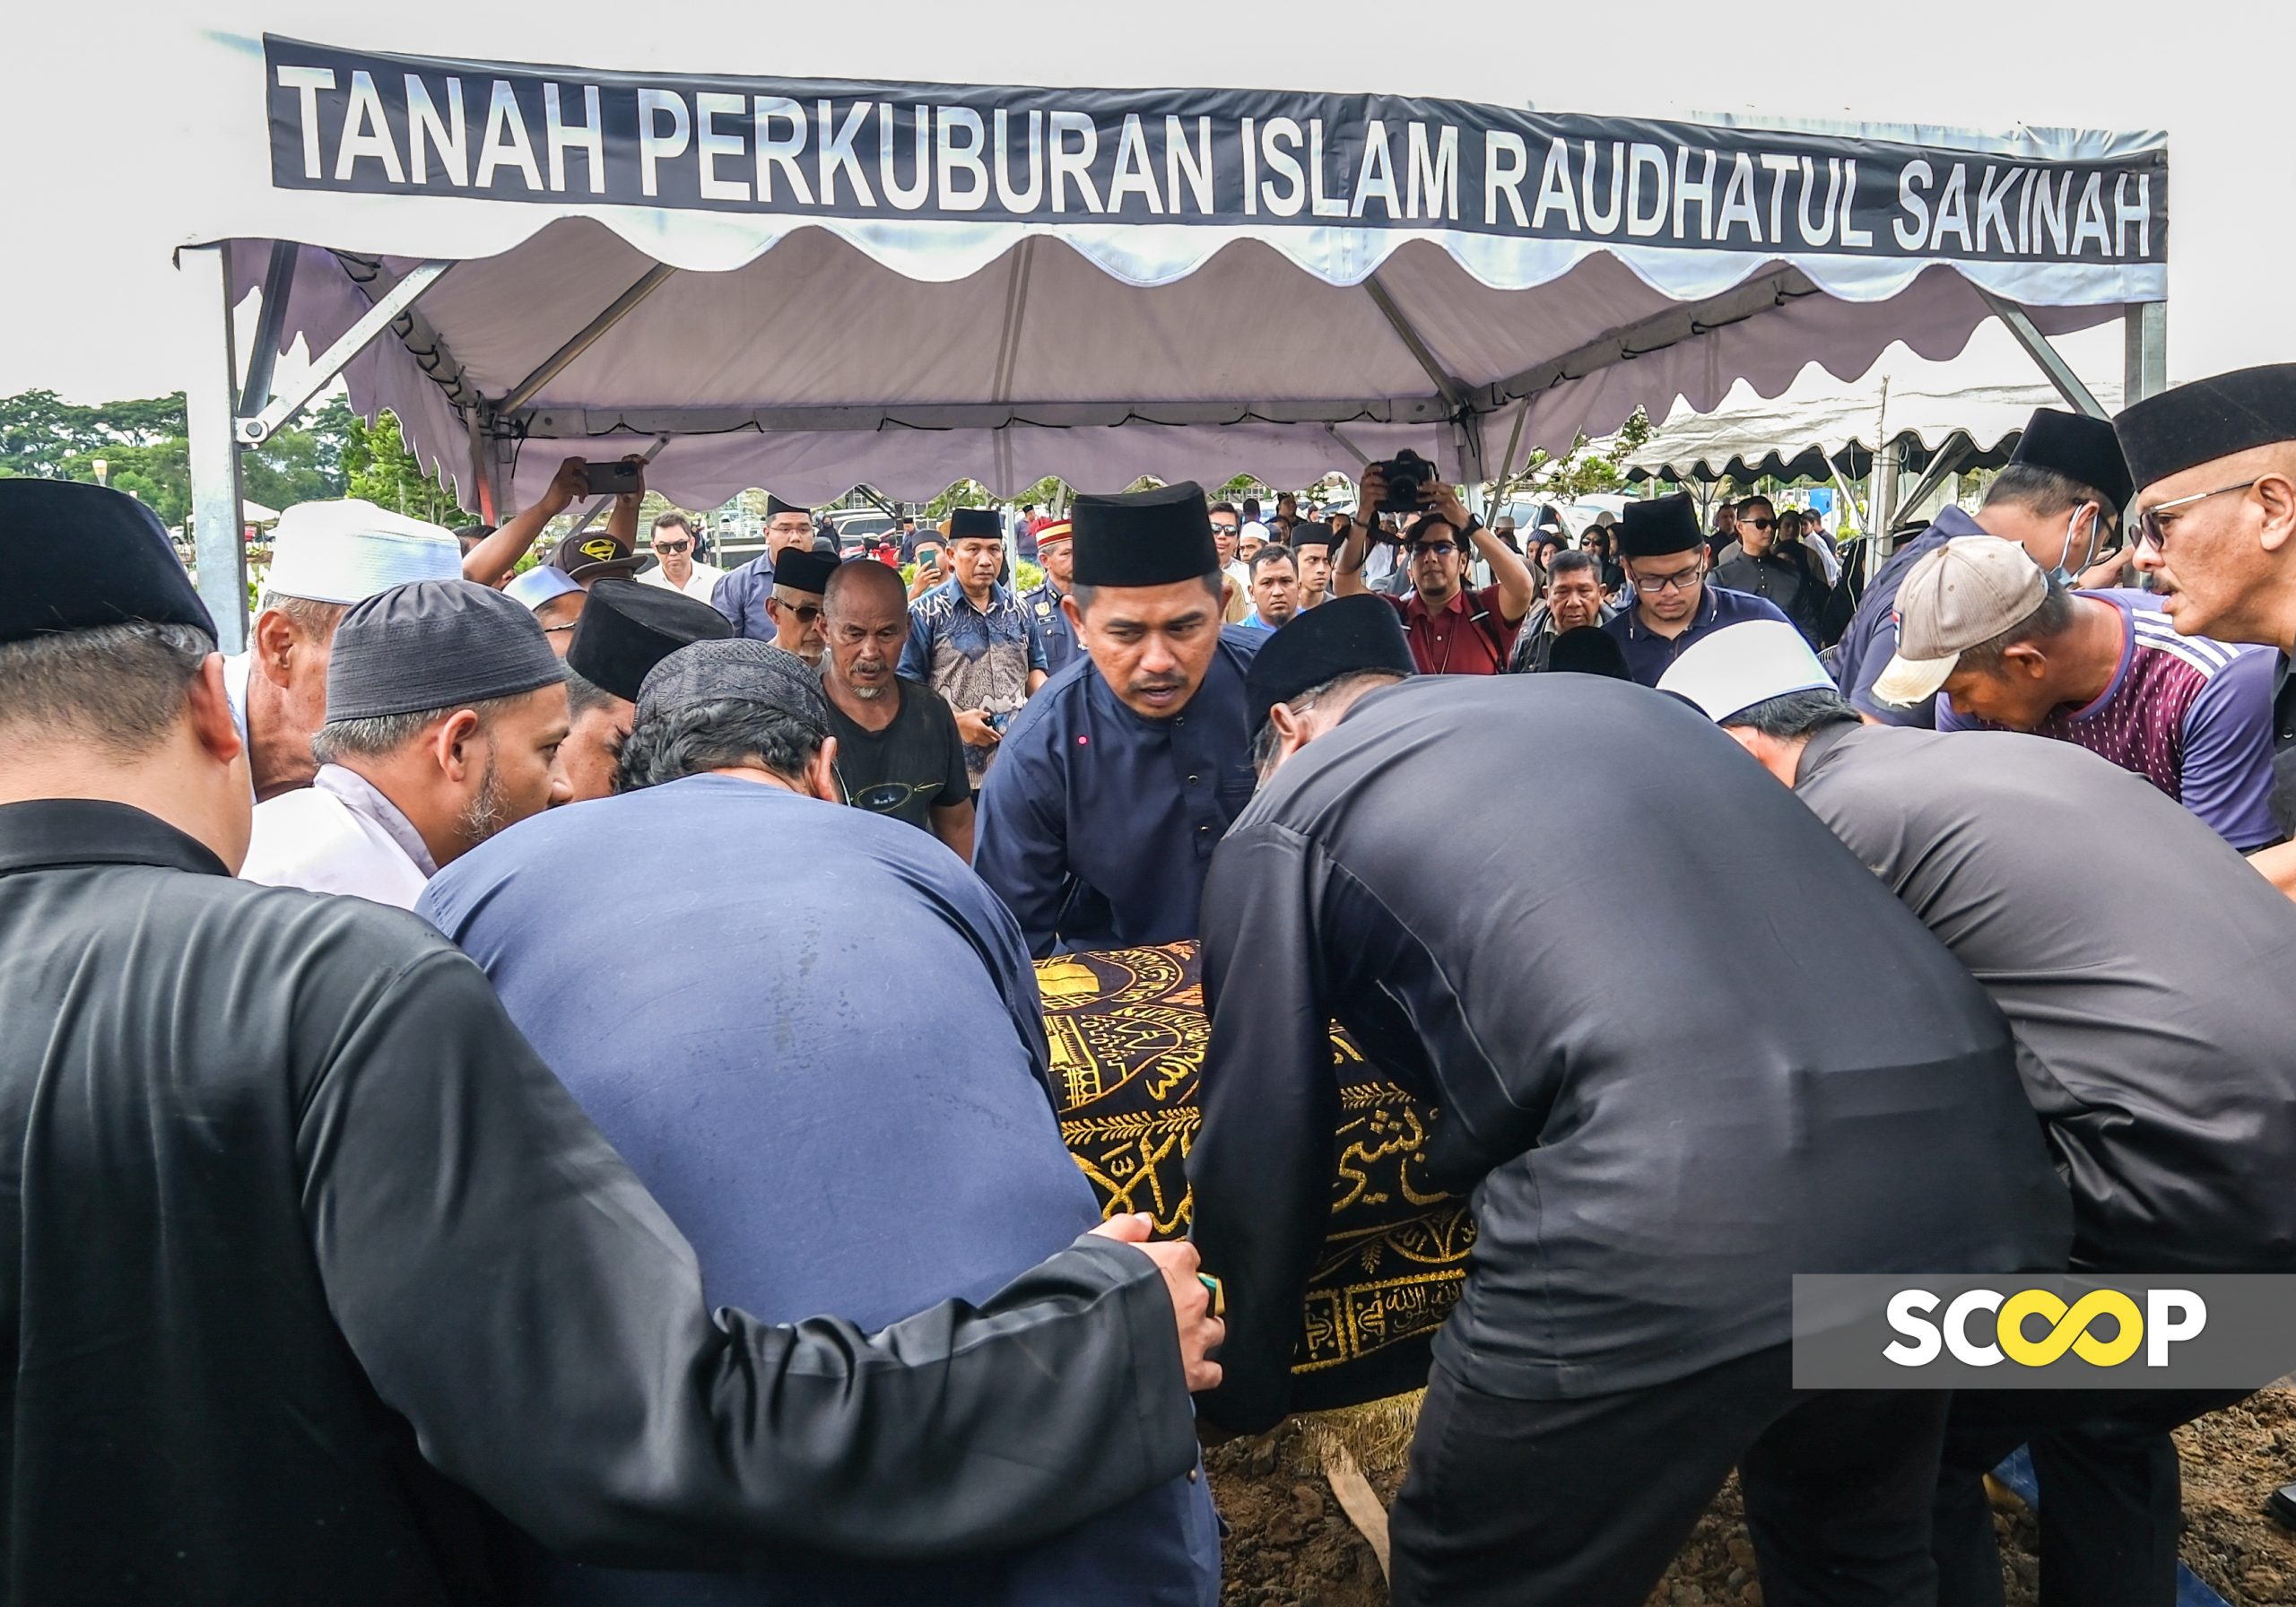 Johari Harun laid to rest at Batu Caves